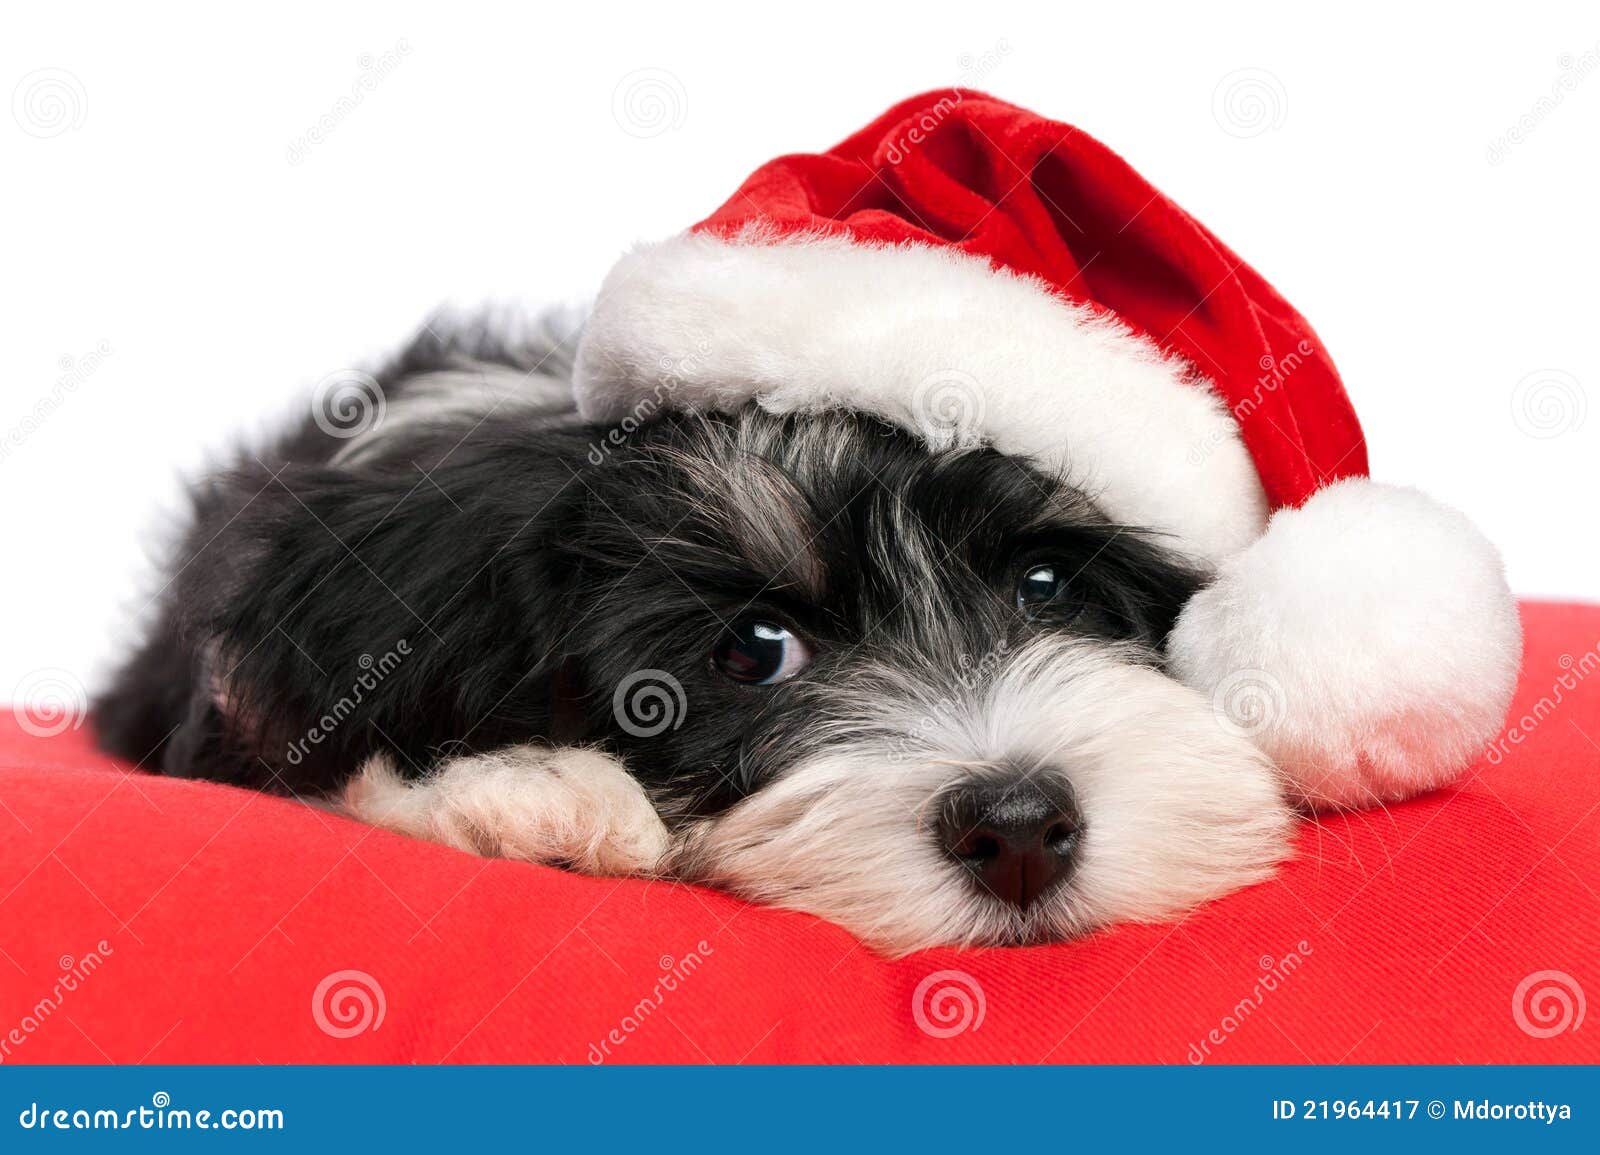 cute christmas havanese puppy dog